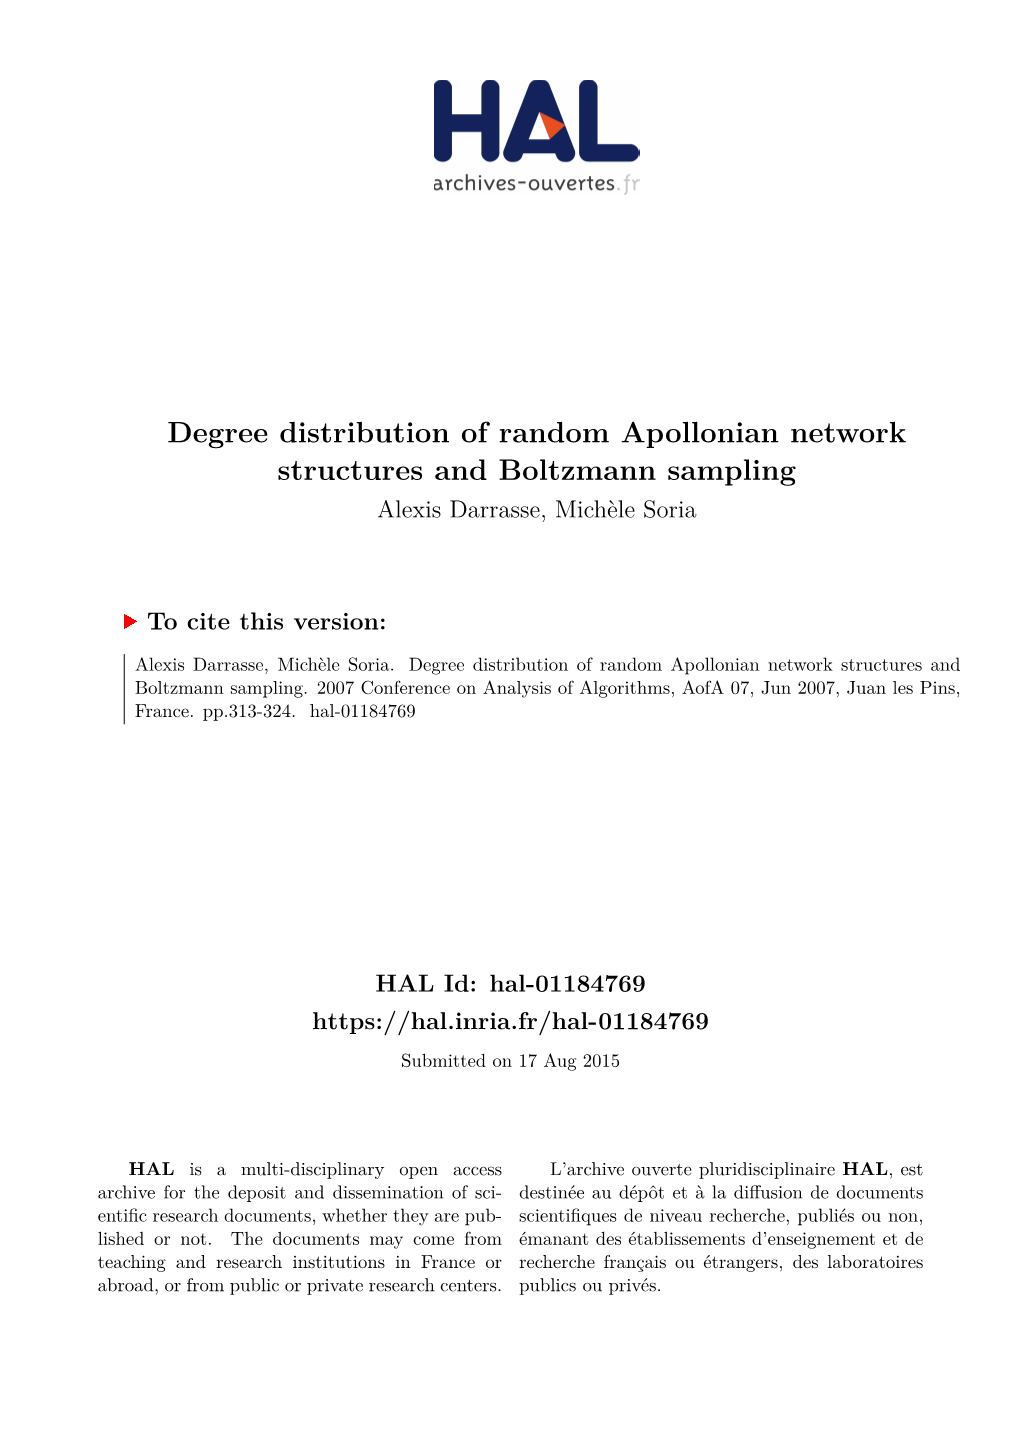 Degree Distribution of Random Apollonian Network Structures and Boltzmann Sampling Alexis Darrasse, Michèle Soria